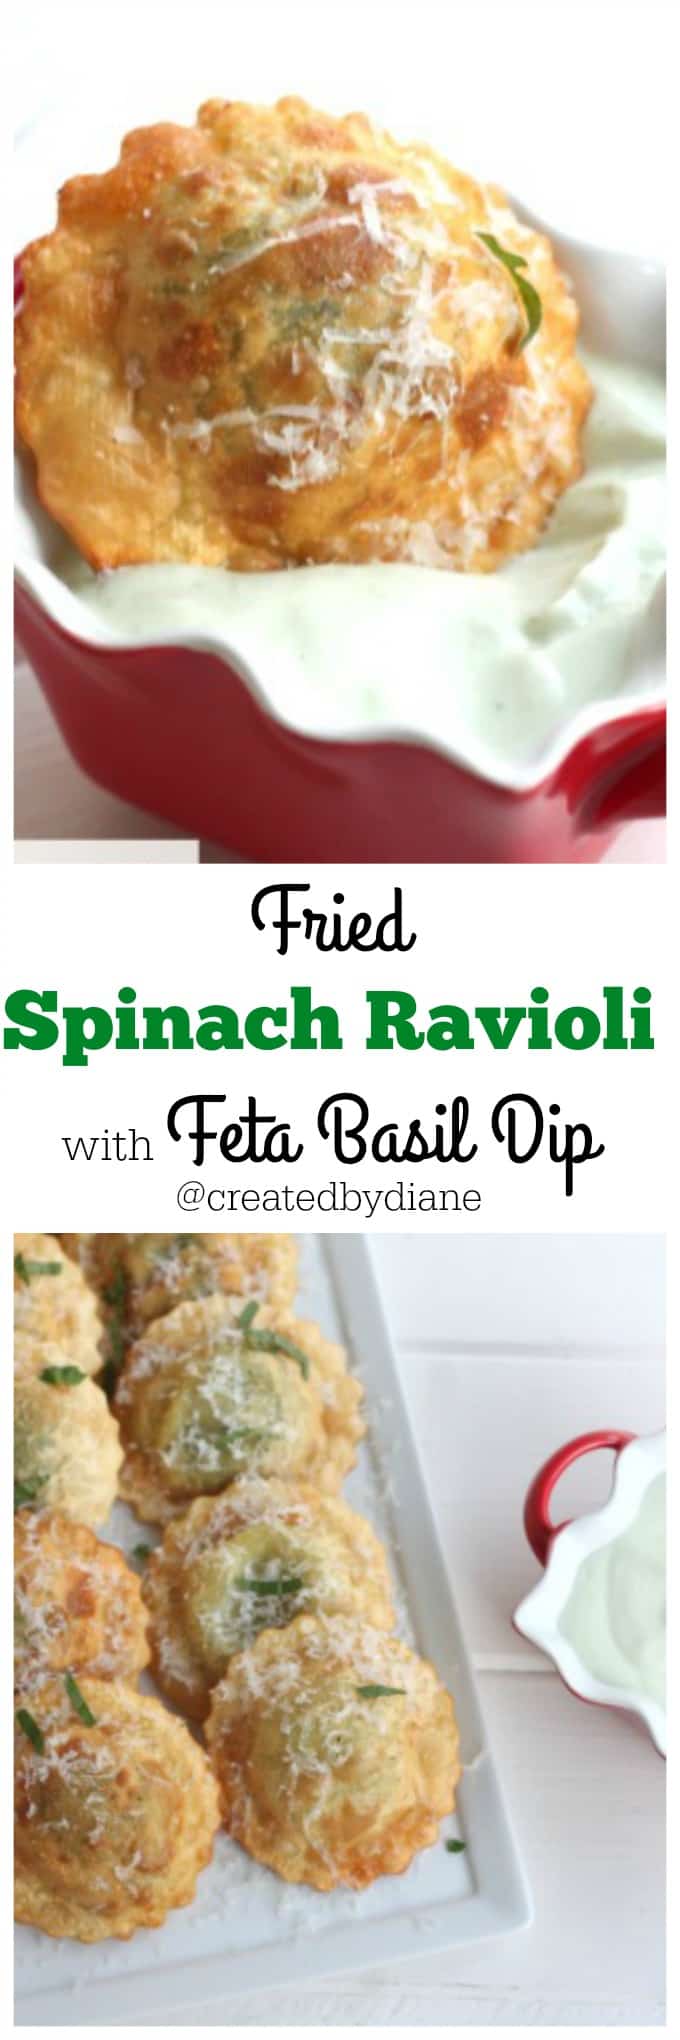 Fried Spinach Ravioli with Feta Basil Dip recipe from @createdbydiane